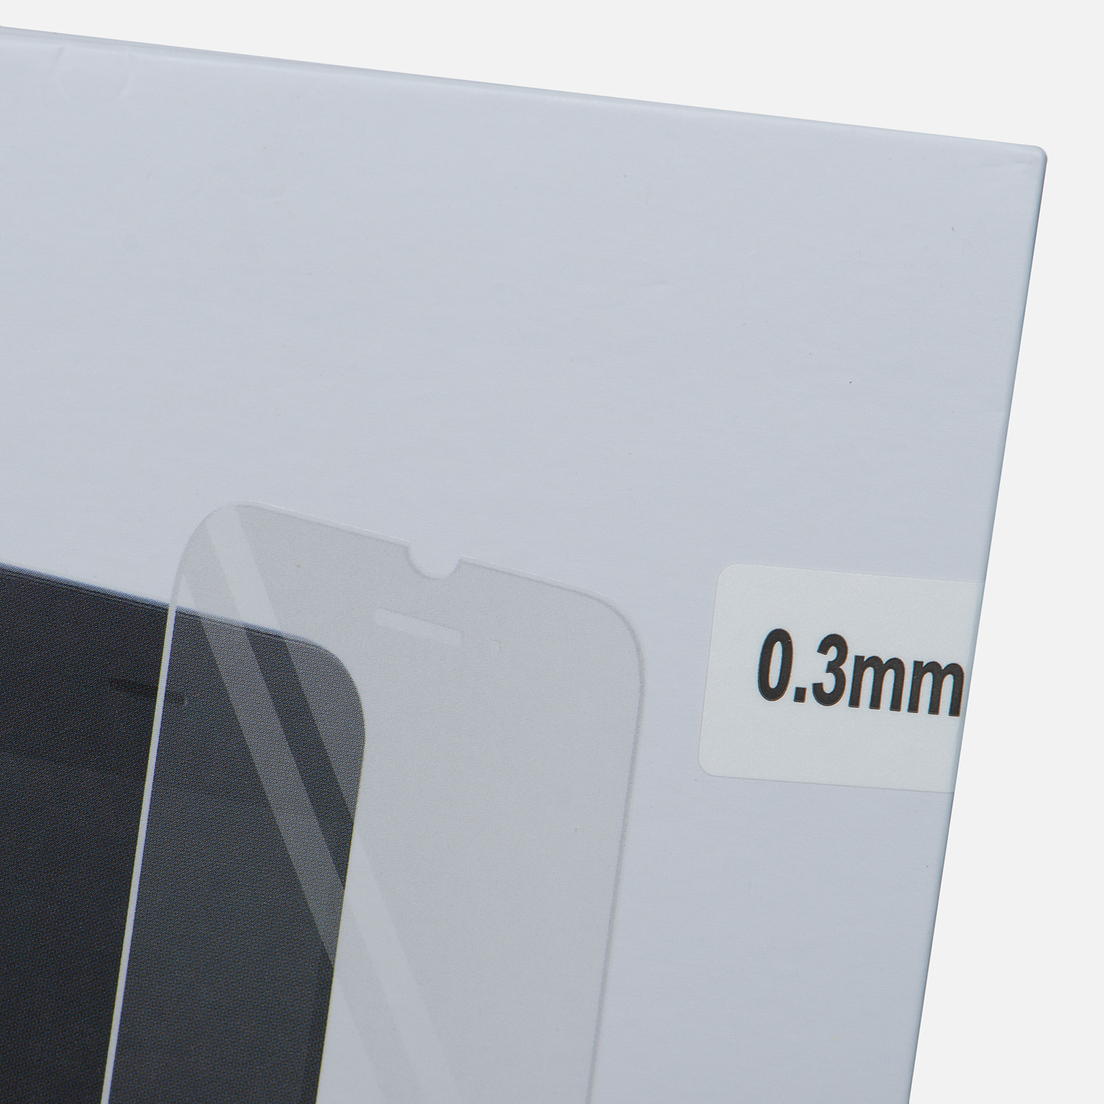 uBear Защитное стекло Tempered iPhone 7 Plus Premium 0.3mm